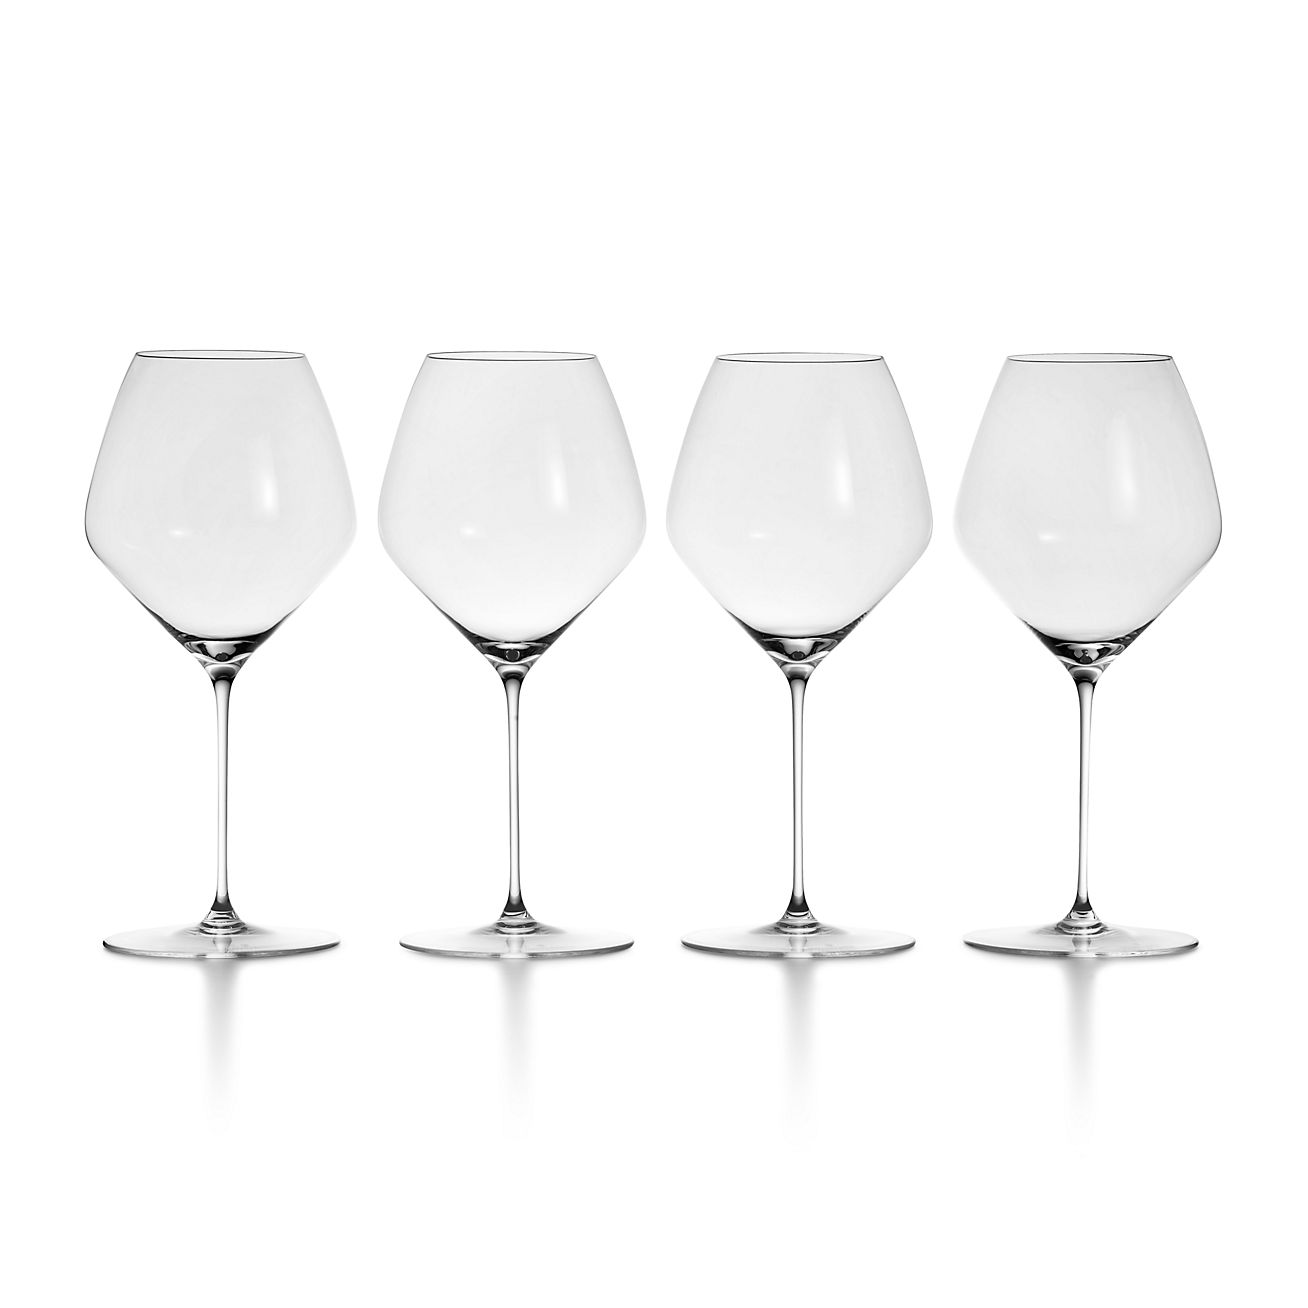 https://media.tiffany.com/is/image/Tiffany/EcomItemL2/tiffany-home-essentialspinot-noir-wine-glass-73459923_1059414_ED.jpg